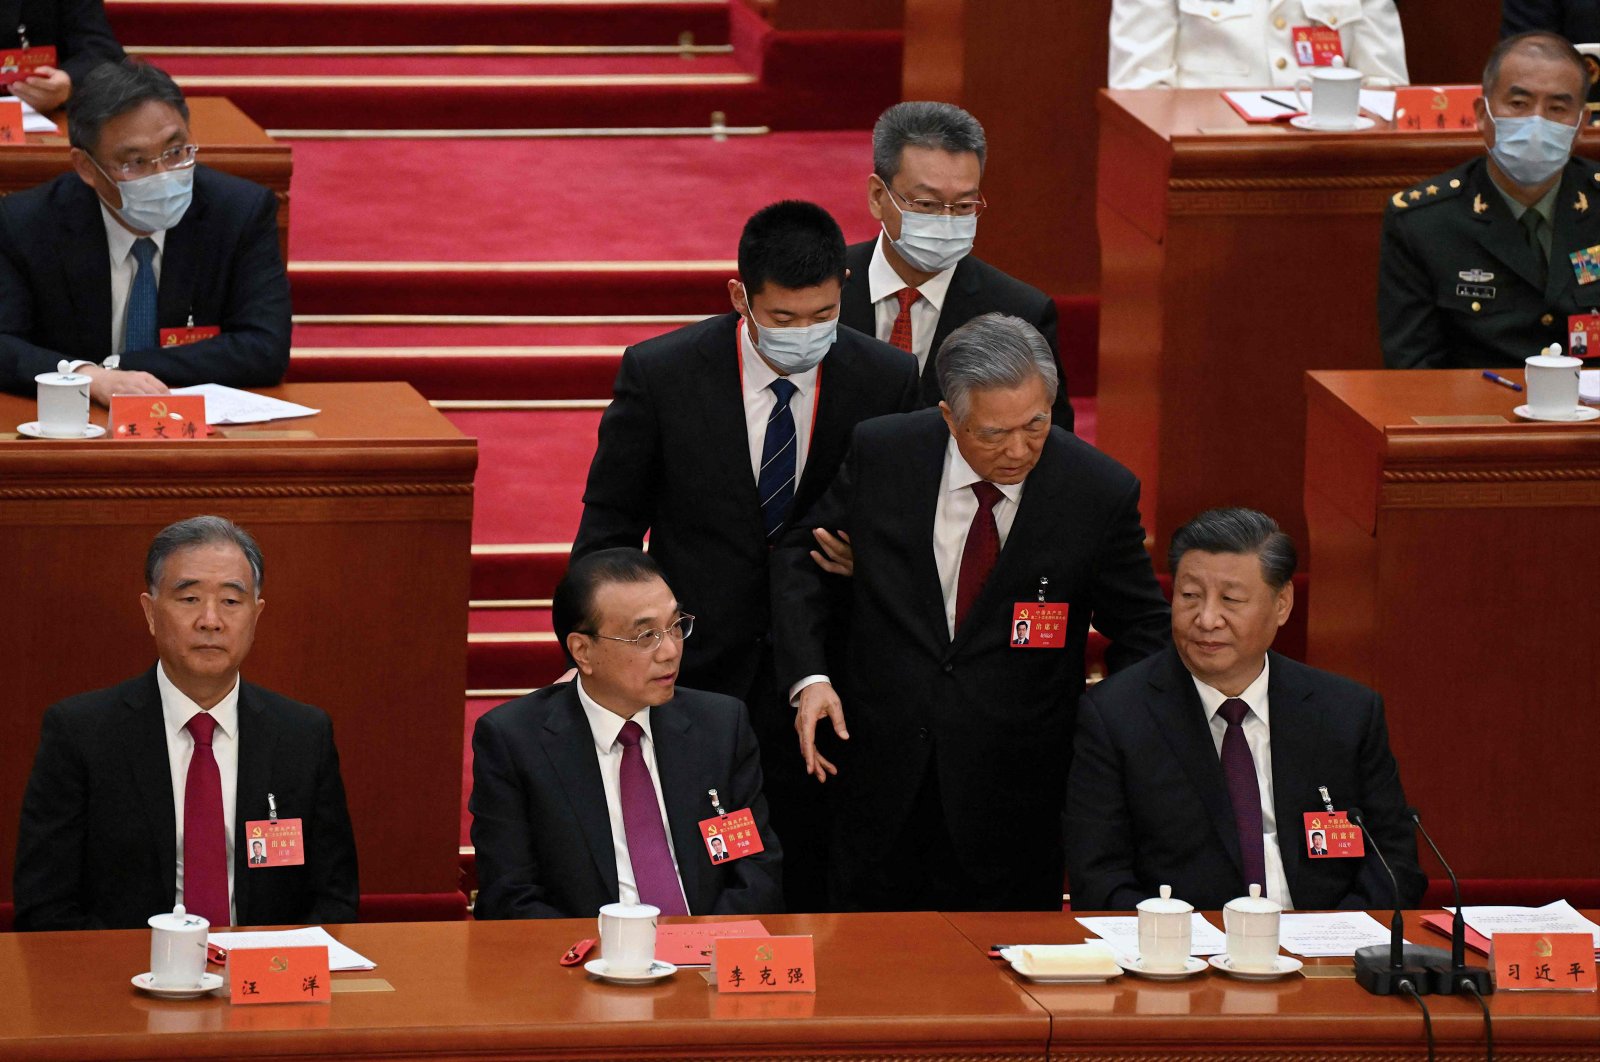 Mantan Presiden China Hu tiba-tiba dicopot dari kongres